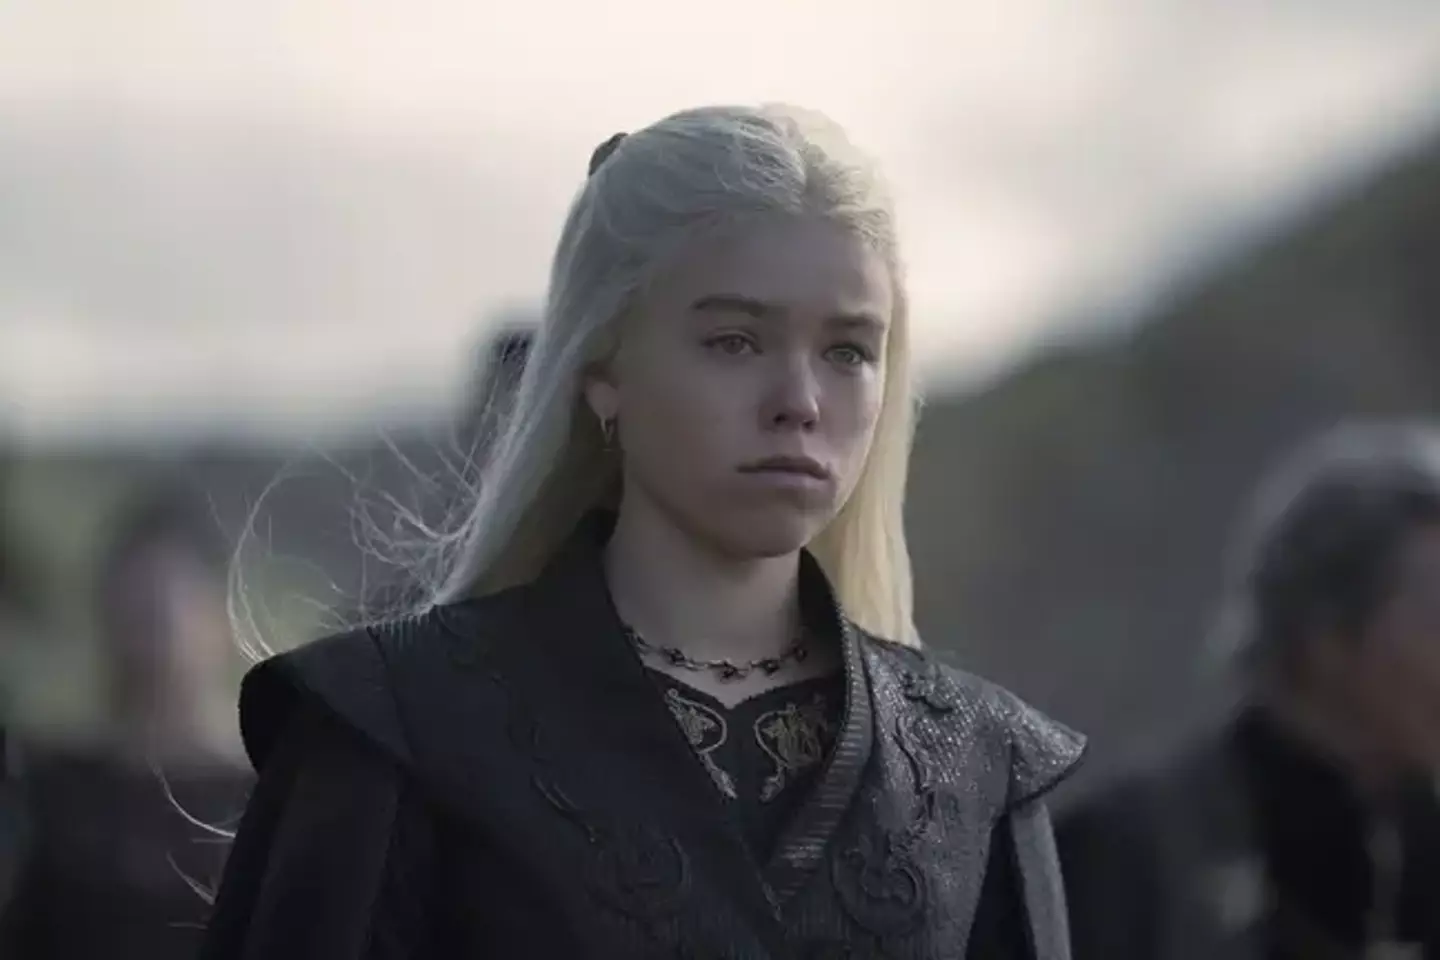 Alcock as Princess Rhaenyra Targaryen in House of the Dragon.